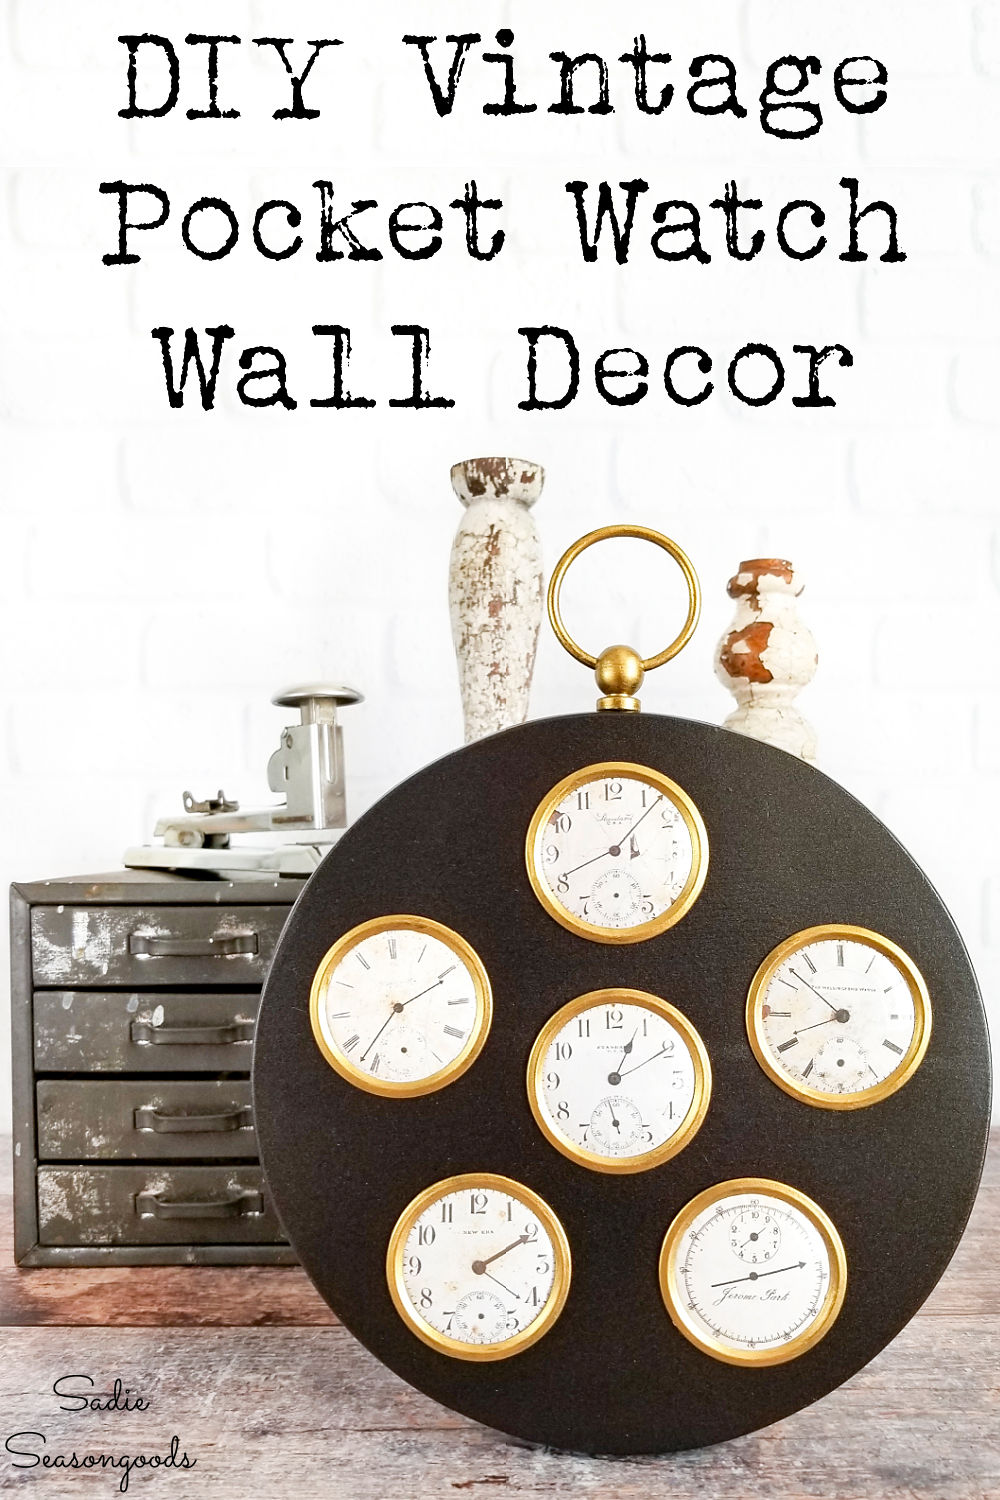 pocket watch wall clock as steampunk wall decor